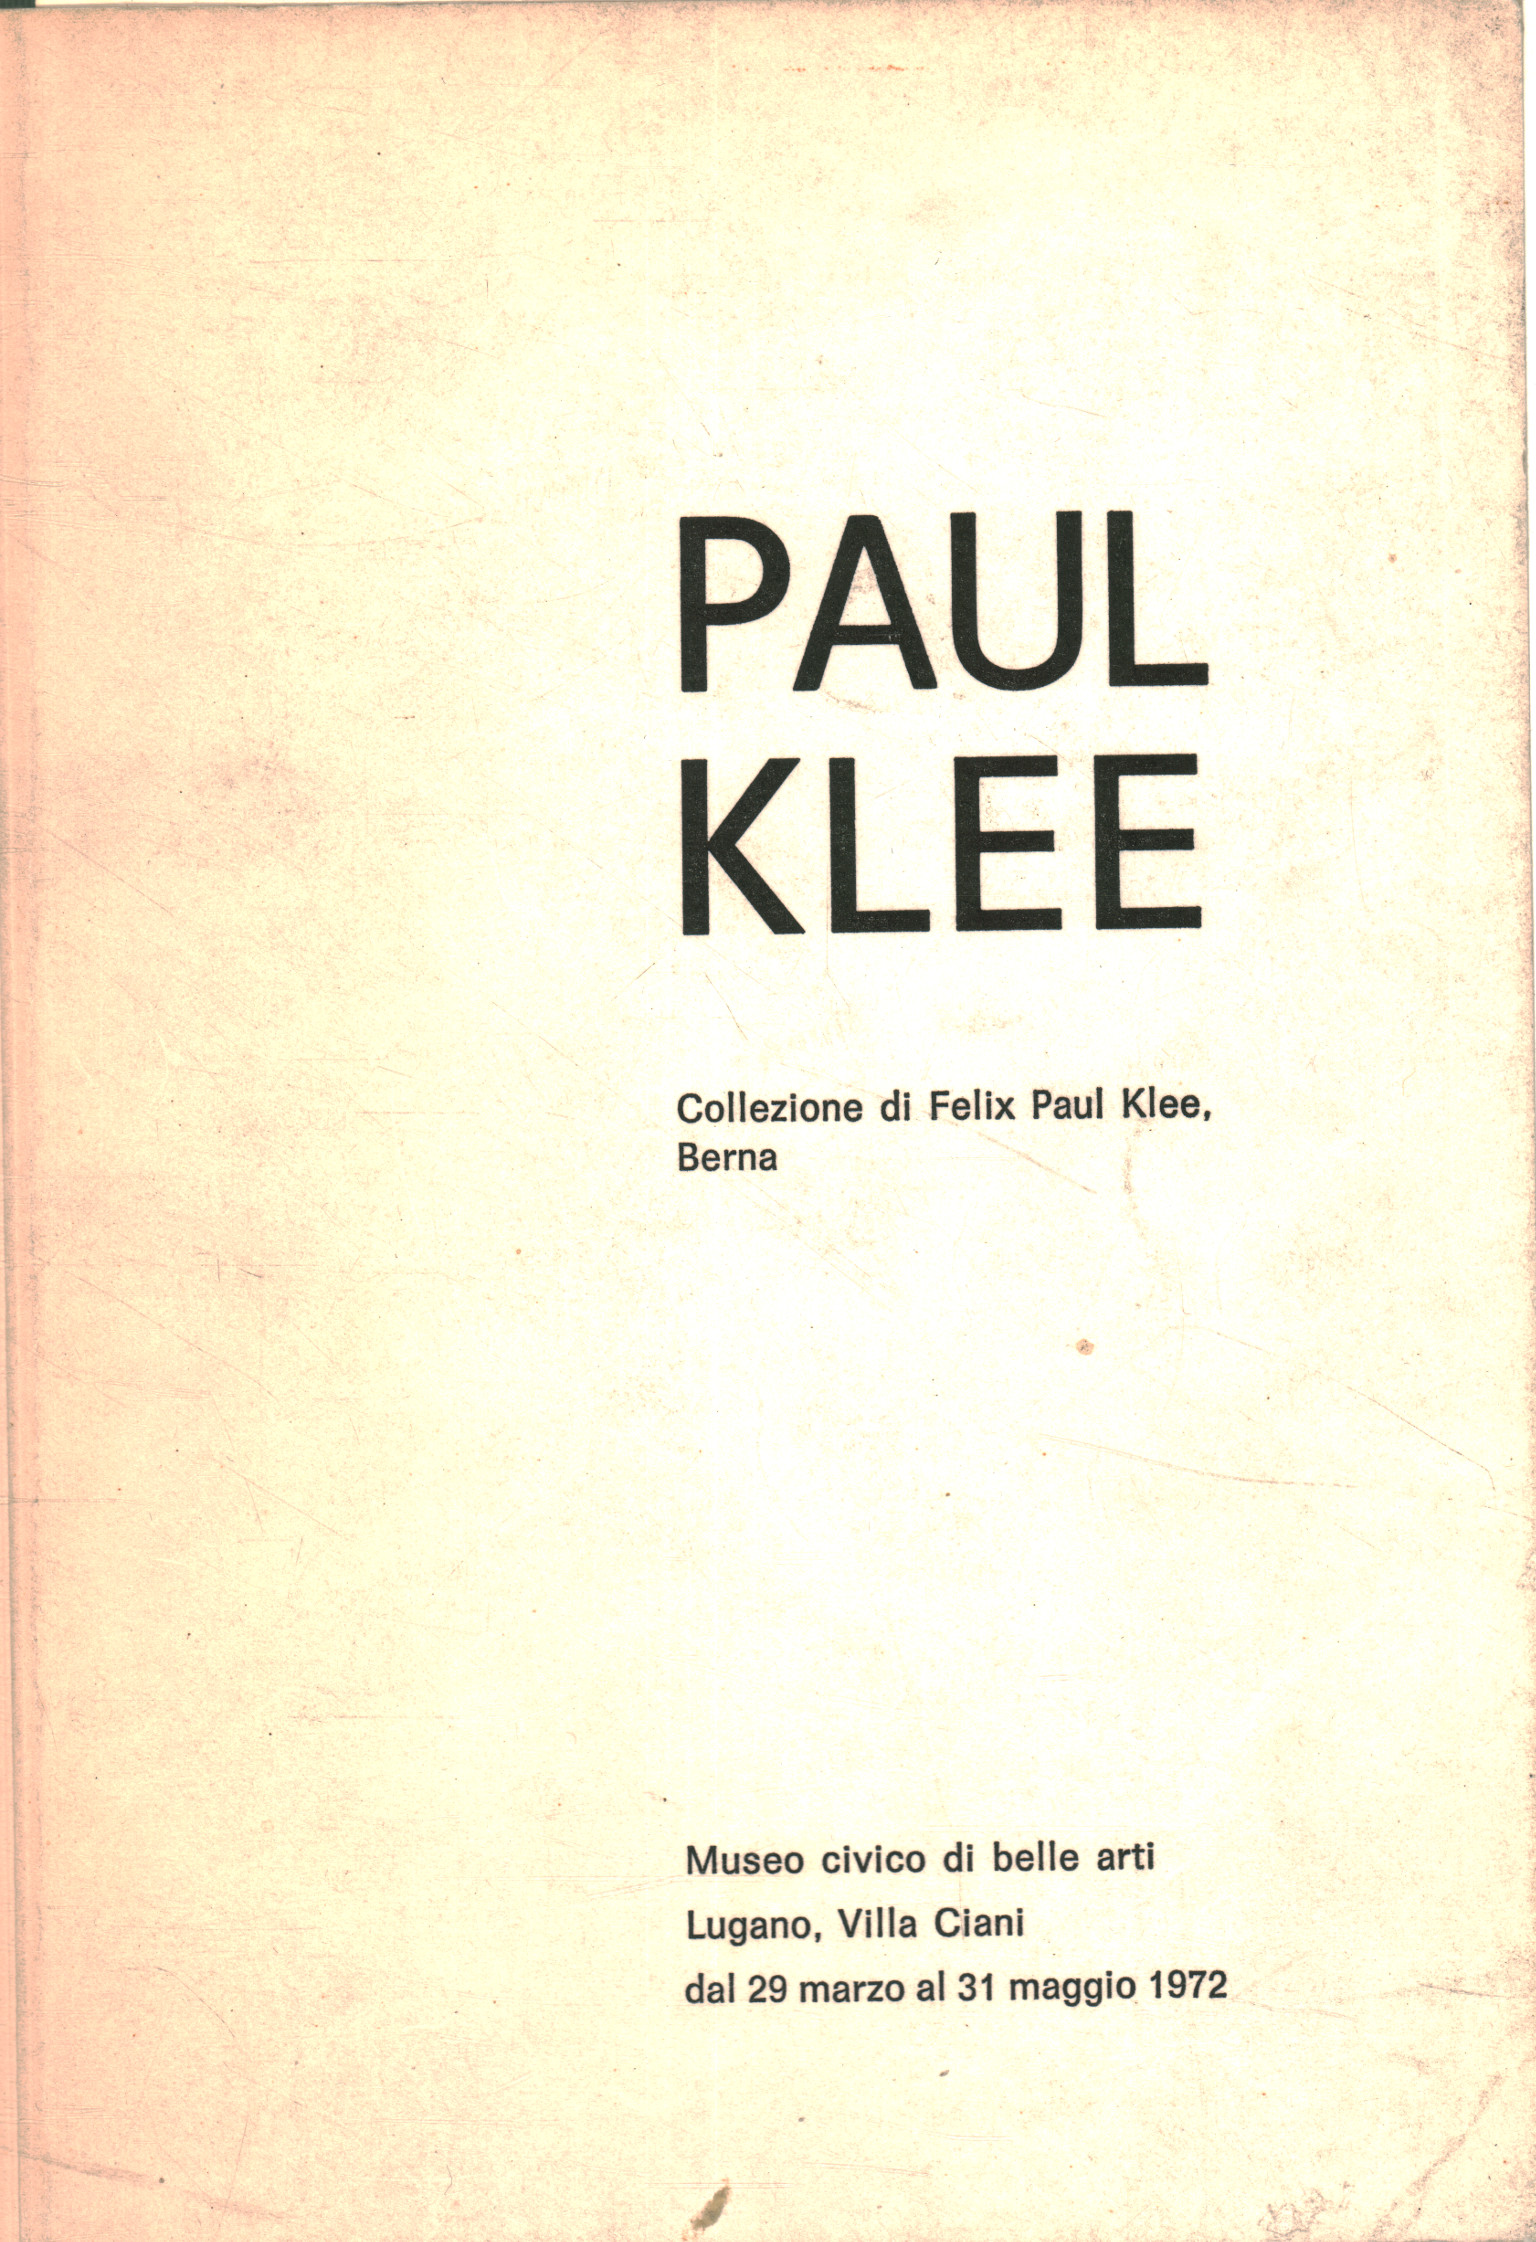 Pablo Klee